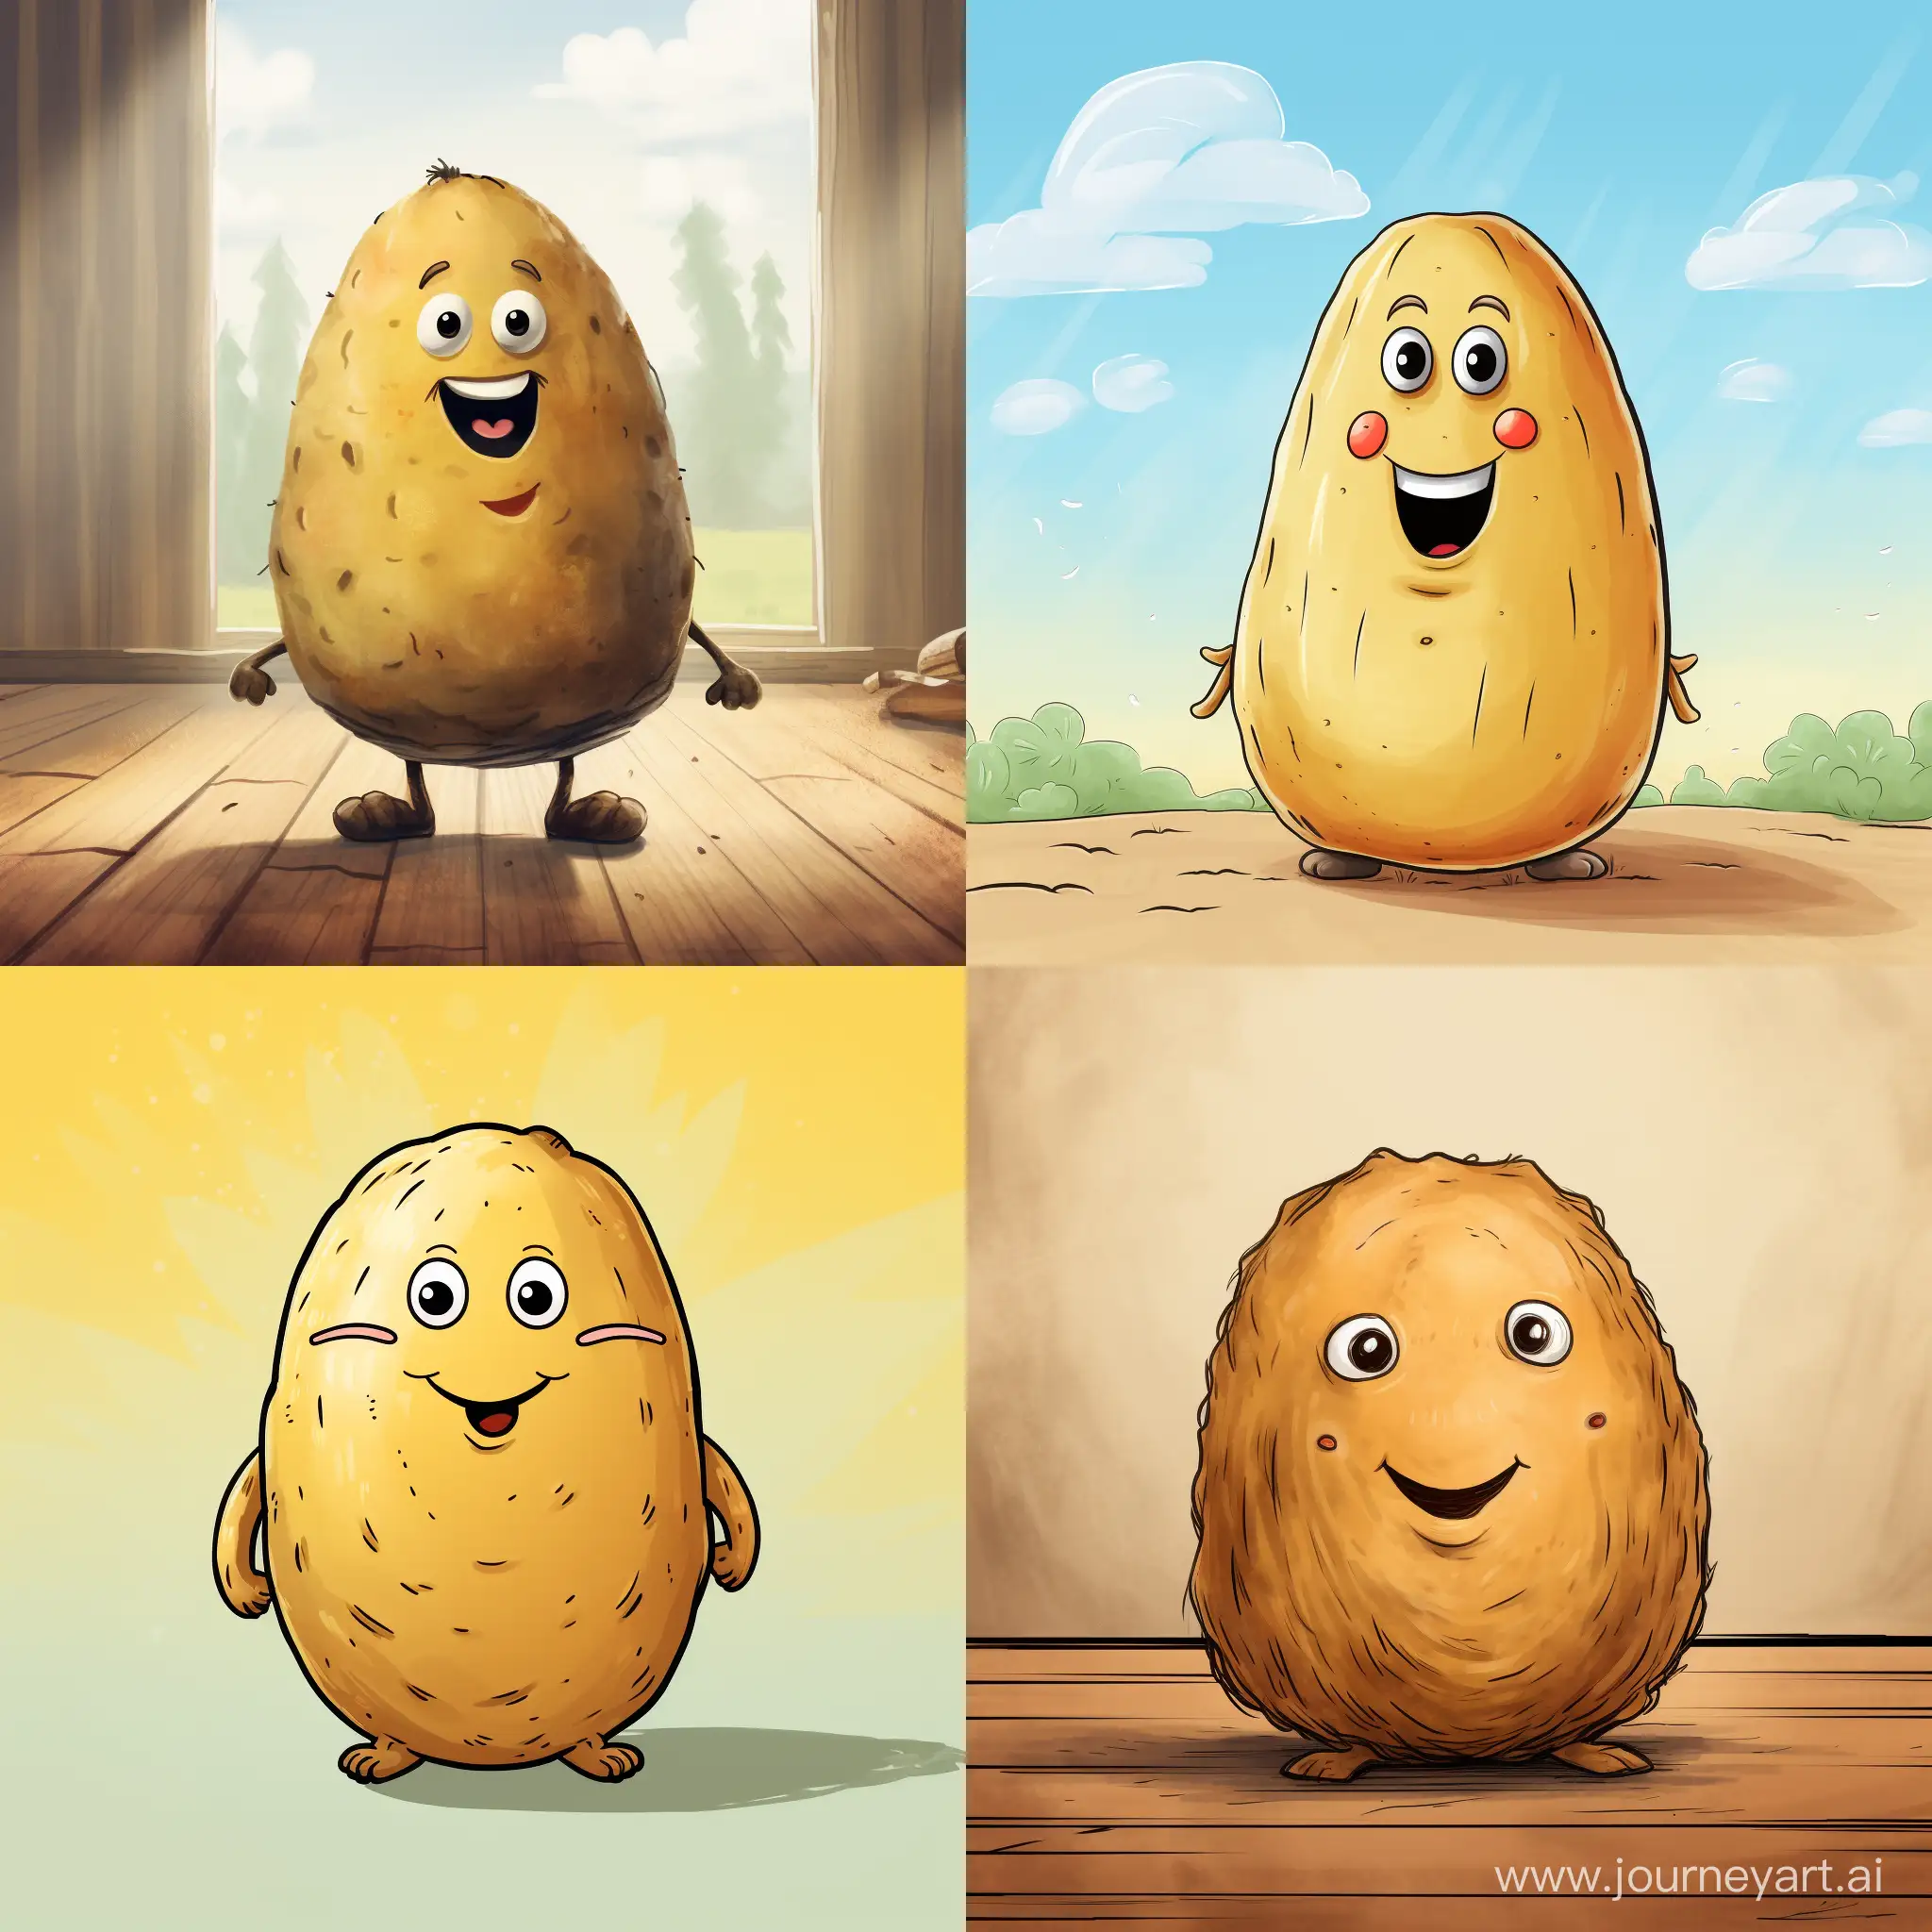 Whimsical-Potato-Illustration-with-Aspect-Ratio-11